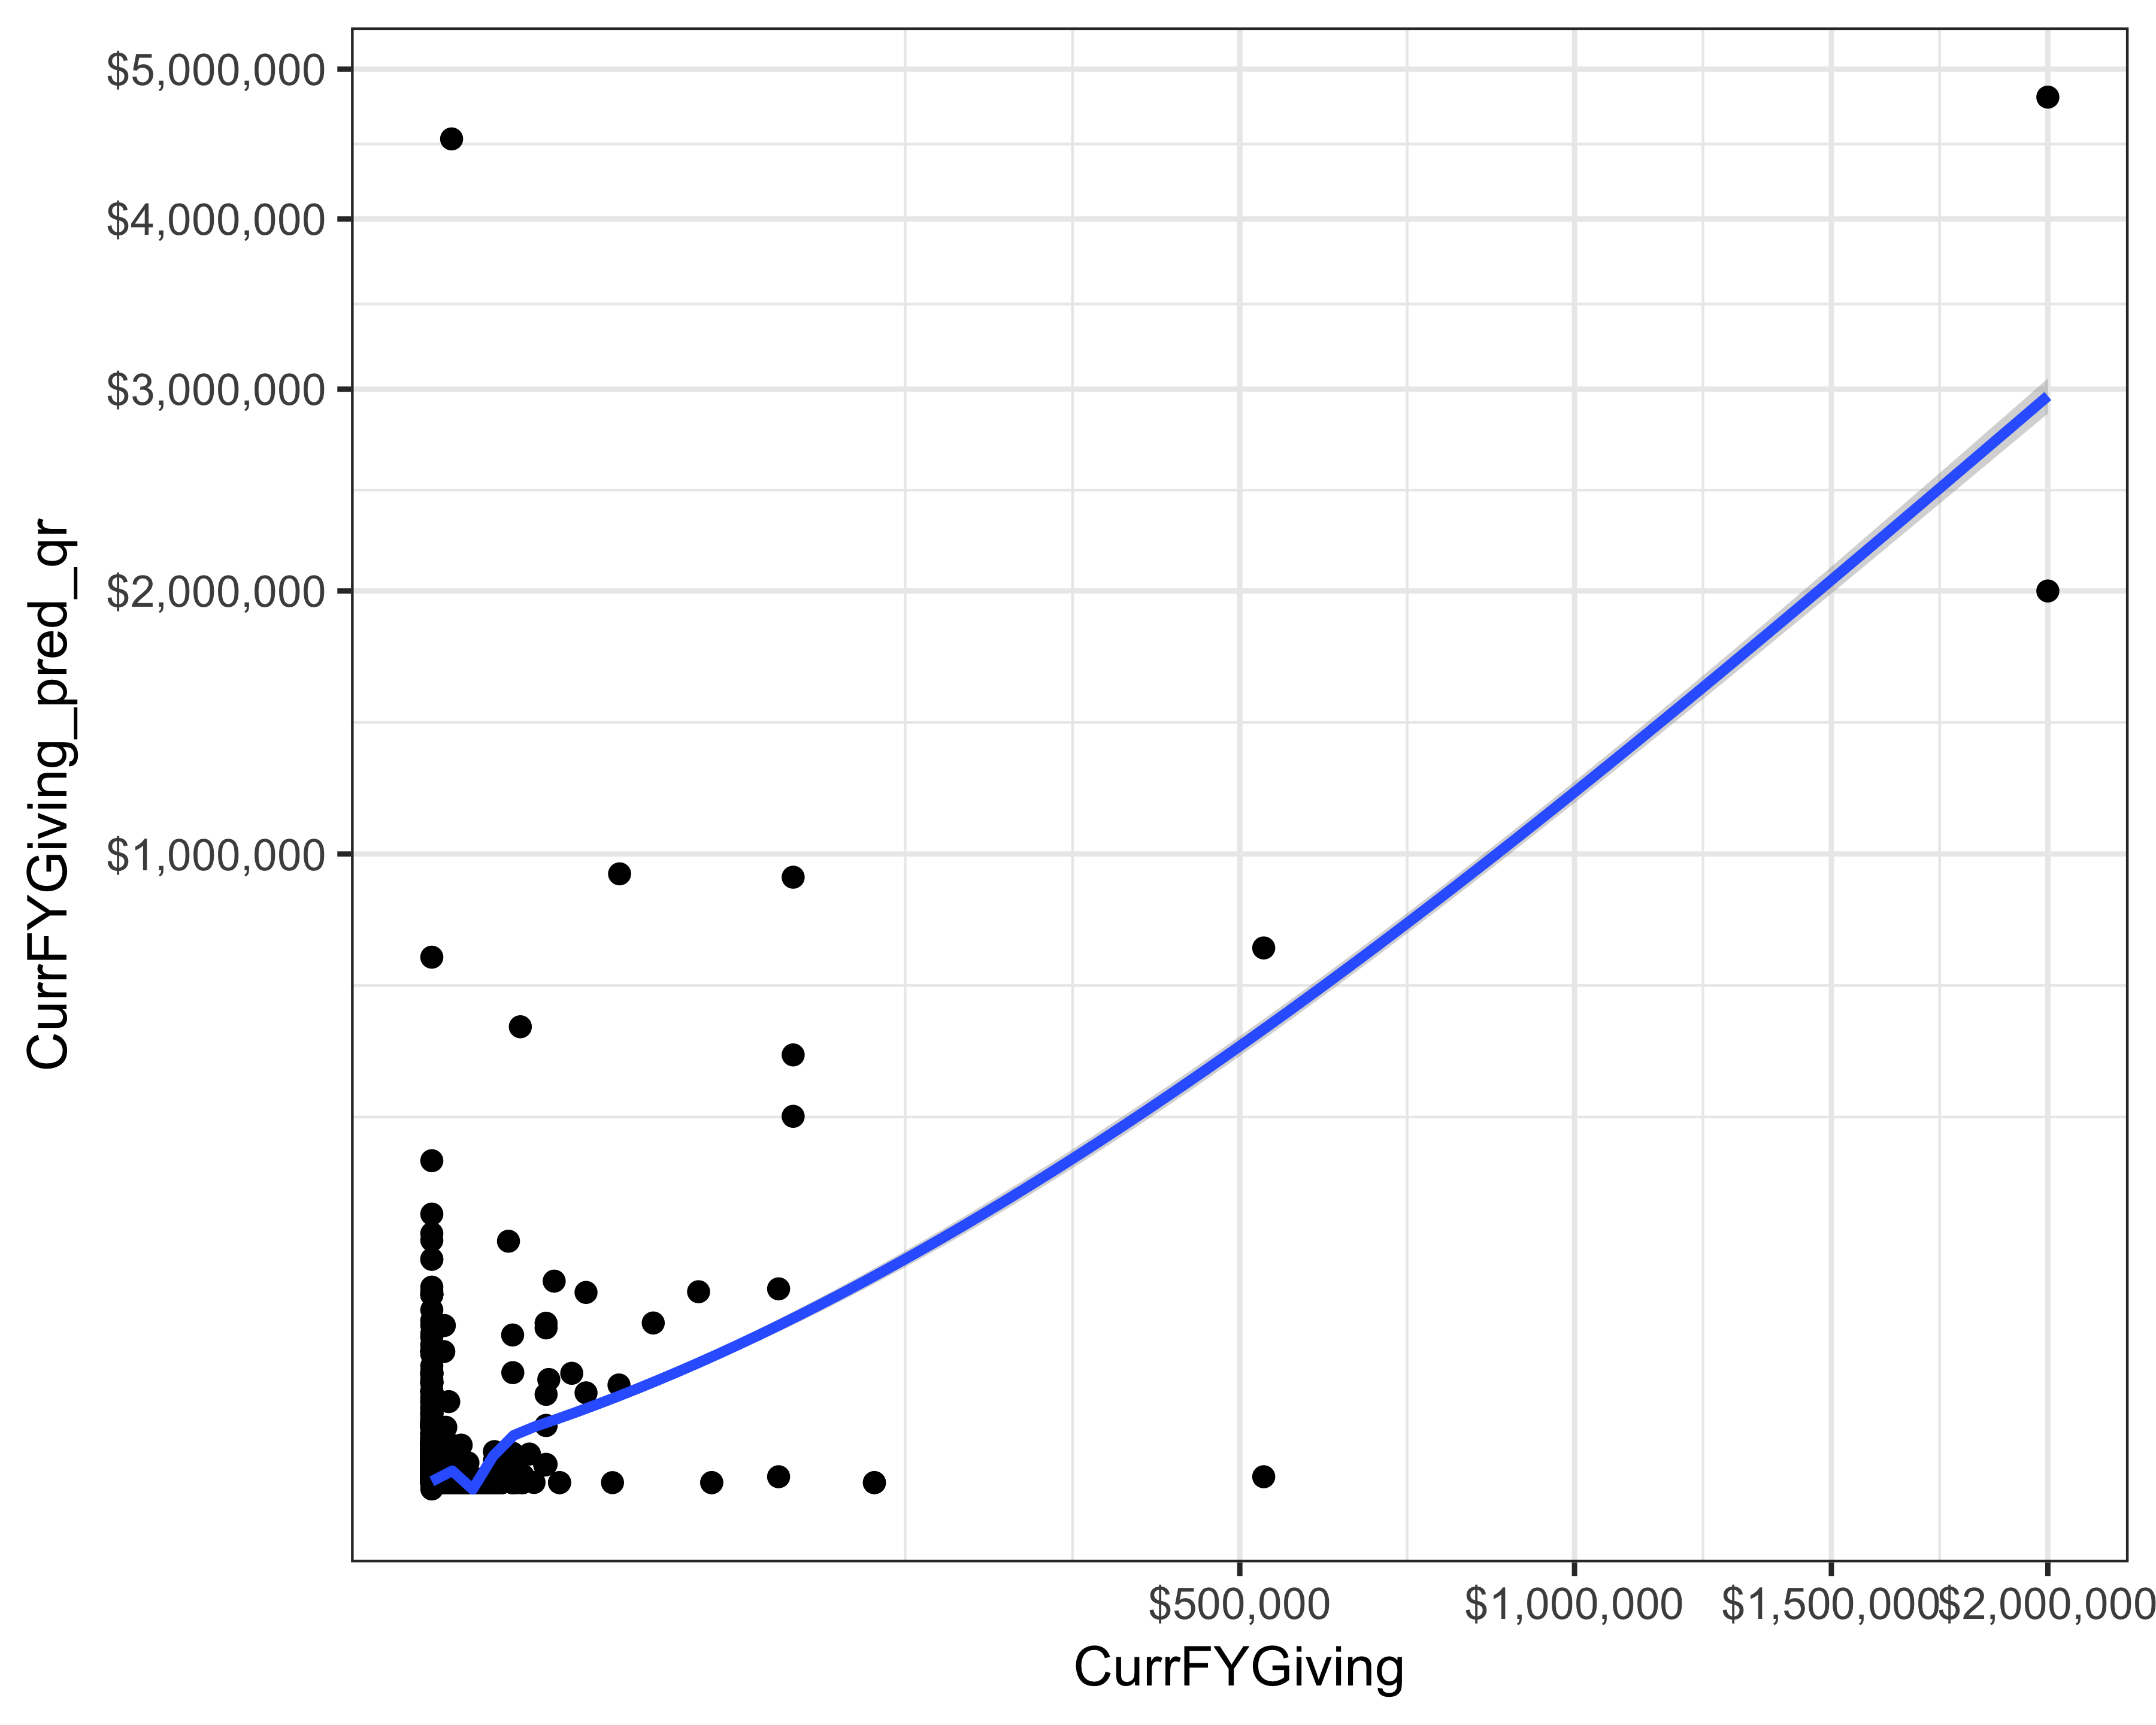 Actual versus prediction of current FY giving using quantile regression